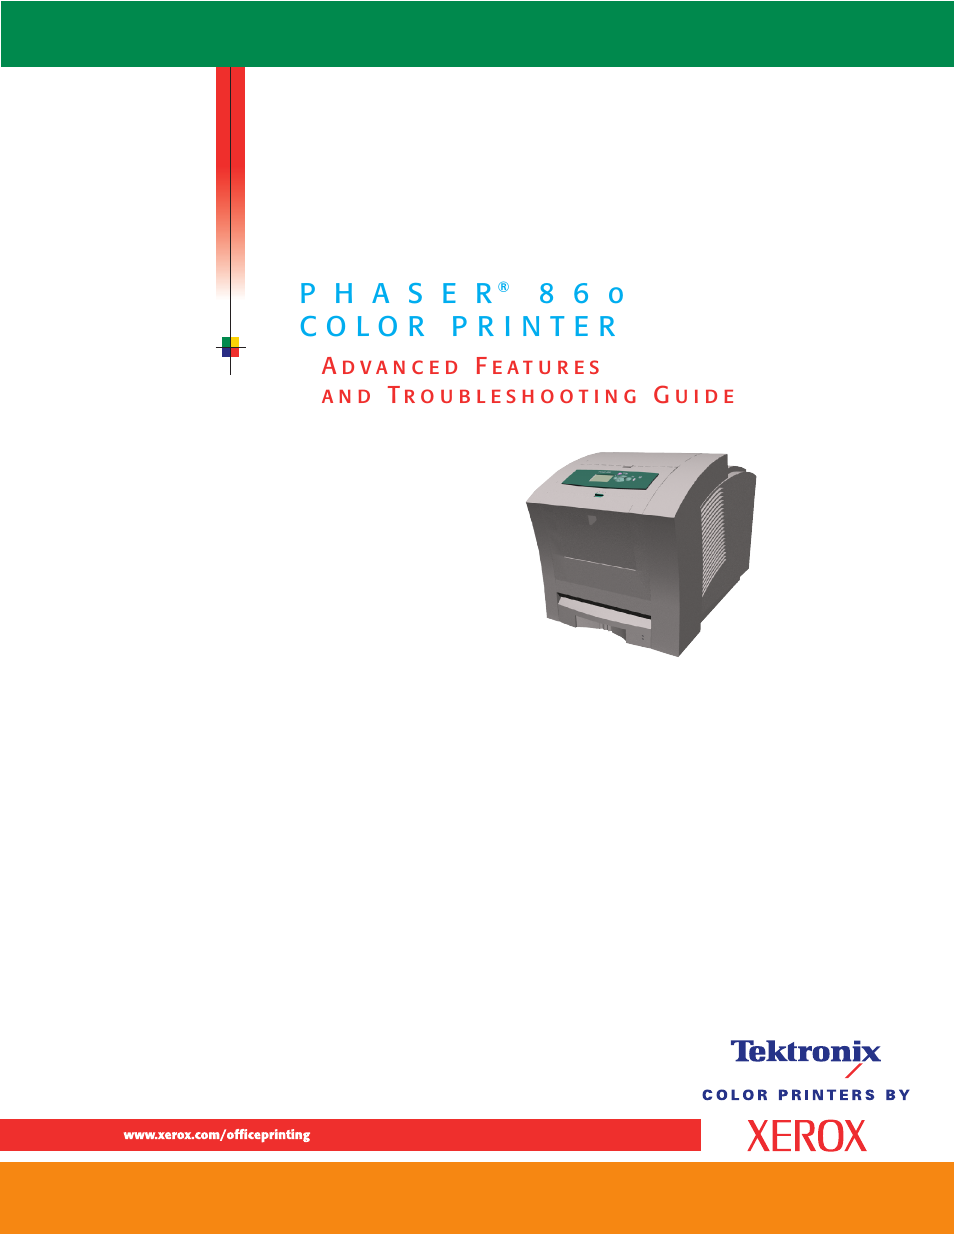 Phaser Color Printer 860